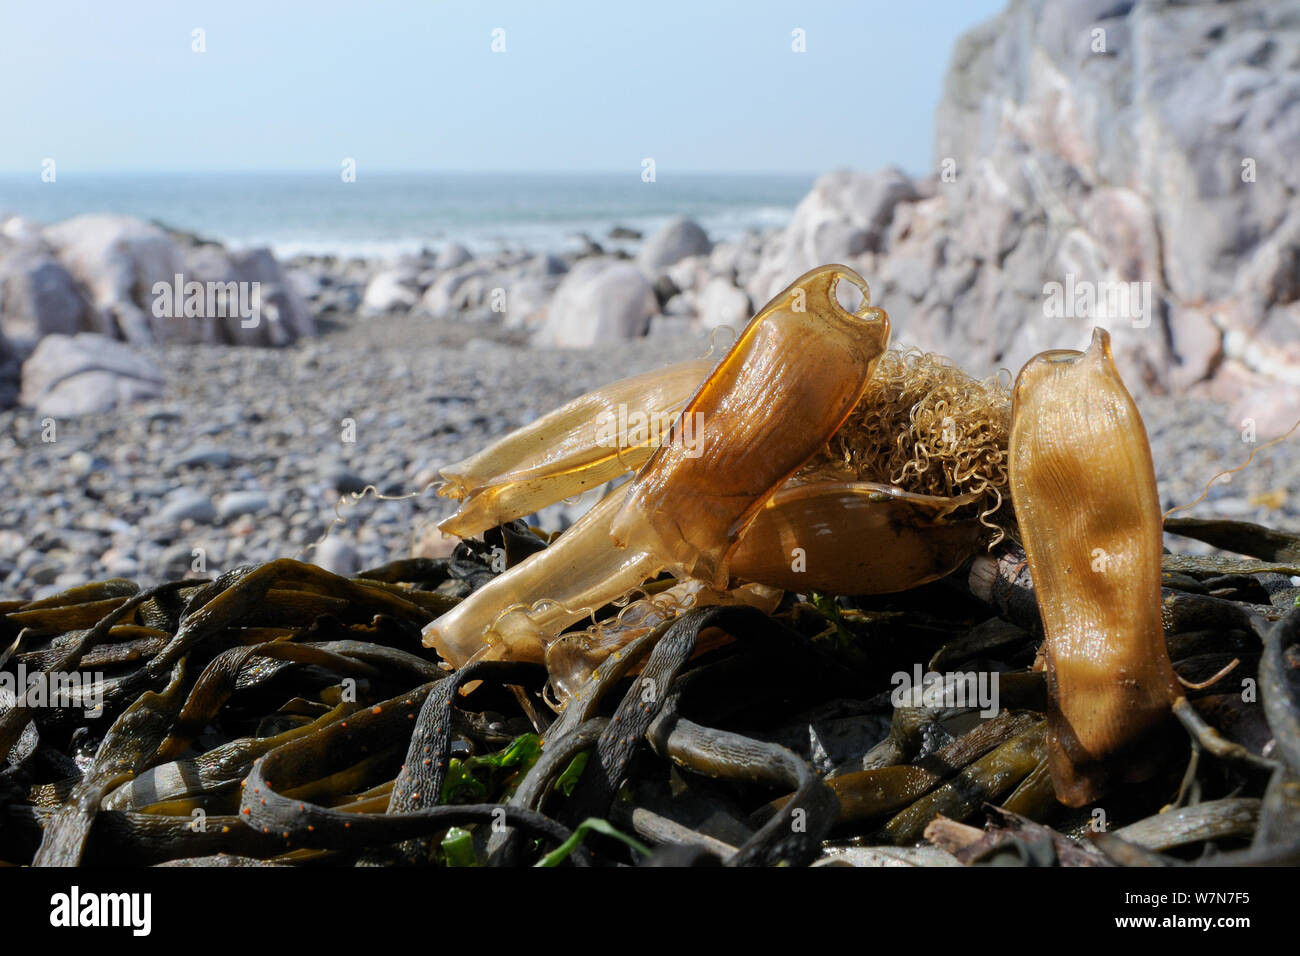 Several Mermaid's purse egg cases of Lesser spotted catshark / Dogfish (Scyliorhinus canicula) on seaweed washed up shore. Rhossili, The Gower peninsula, UK, July. Stock Photo